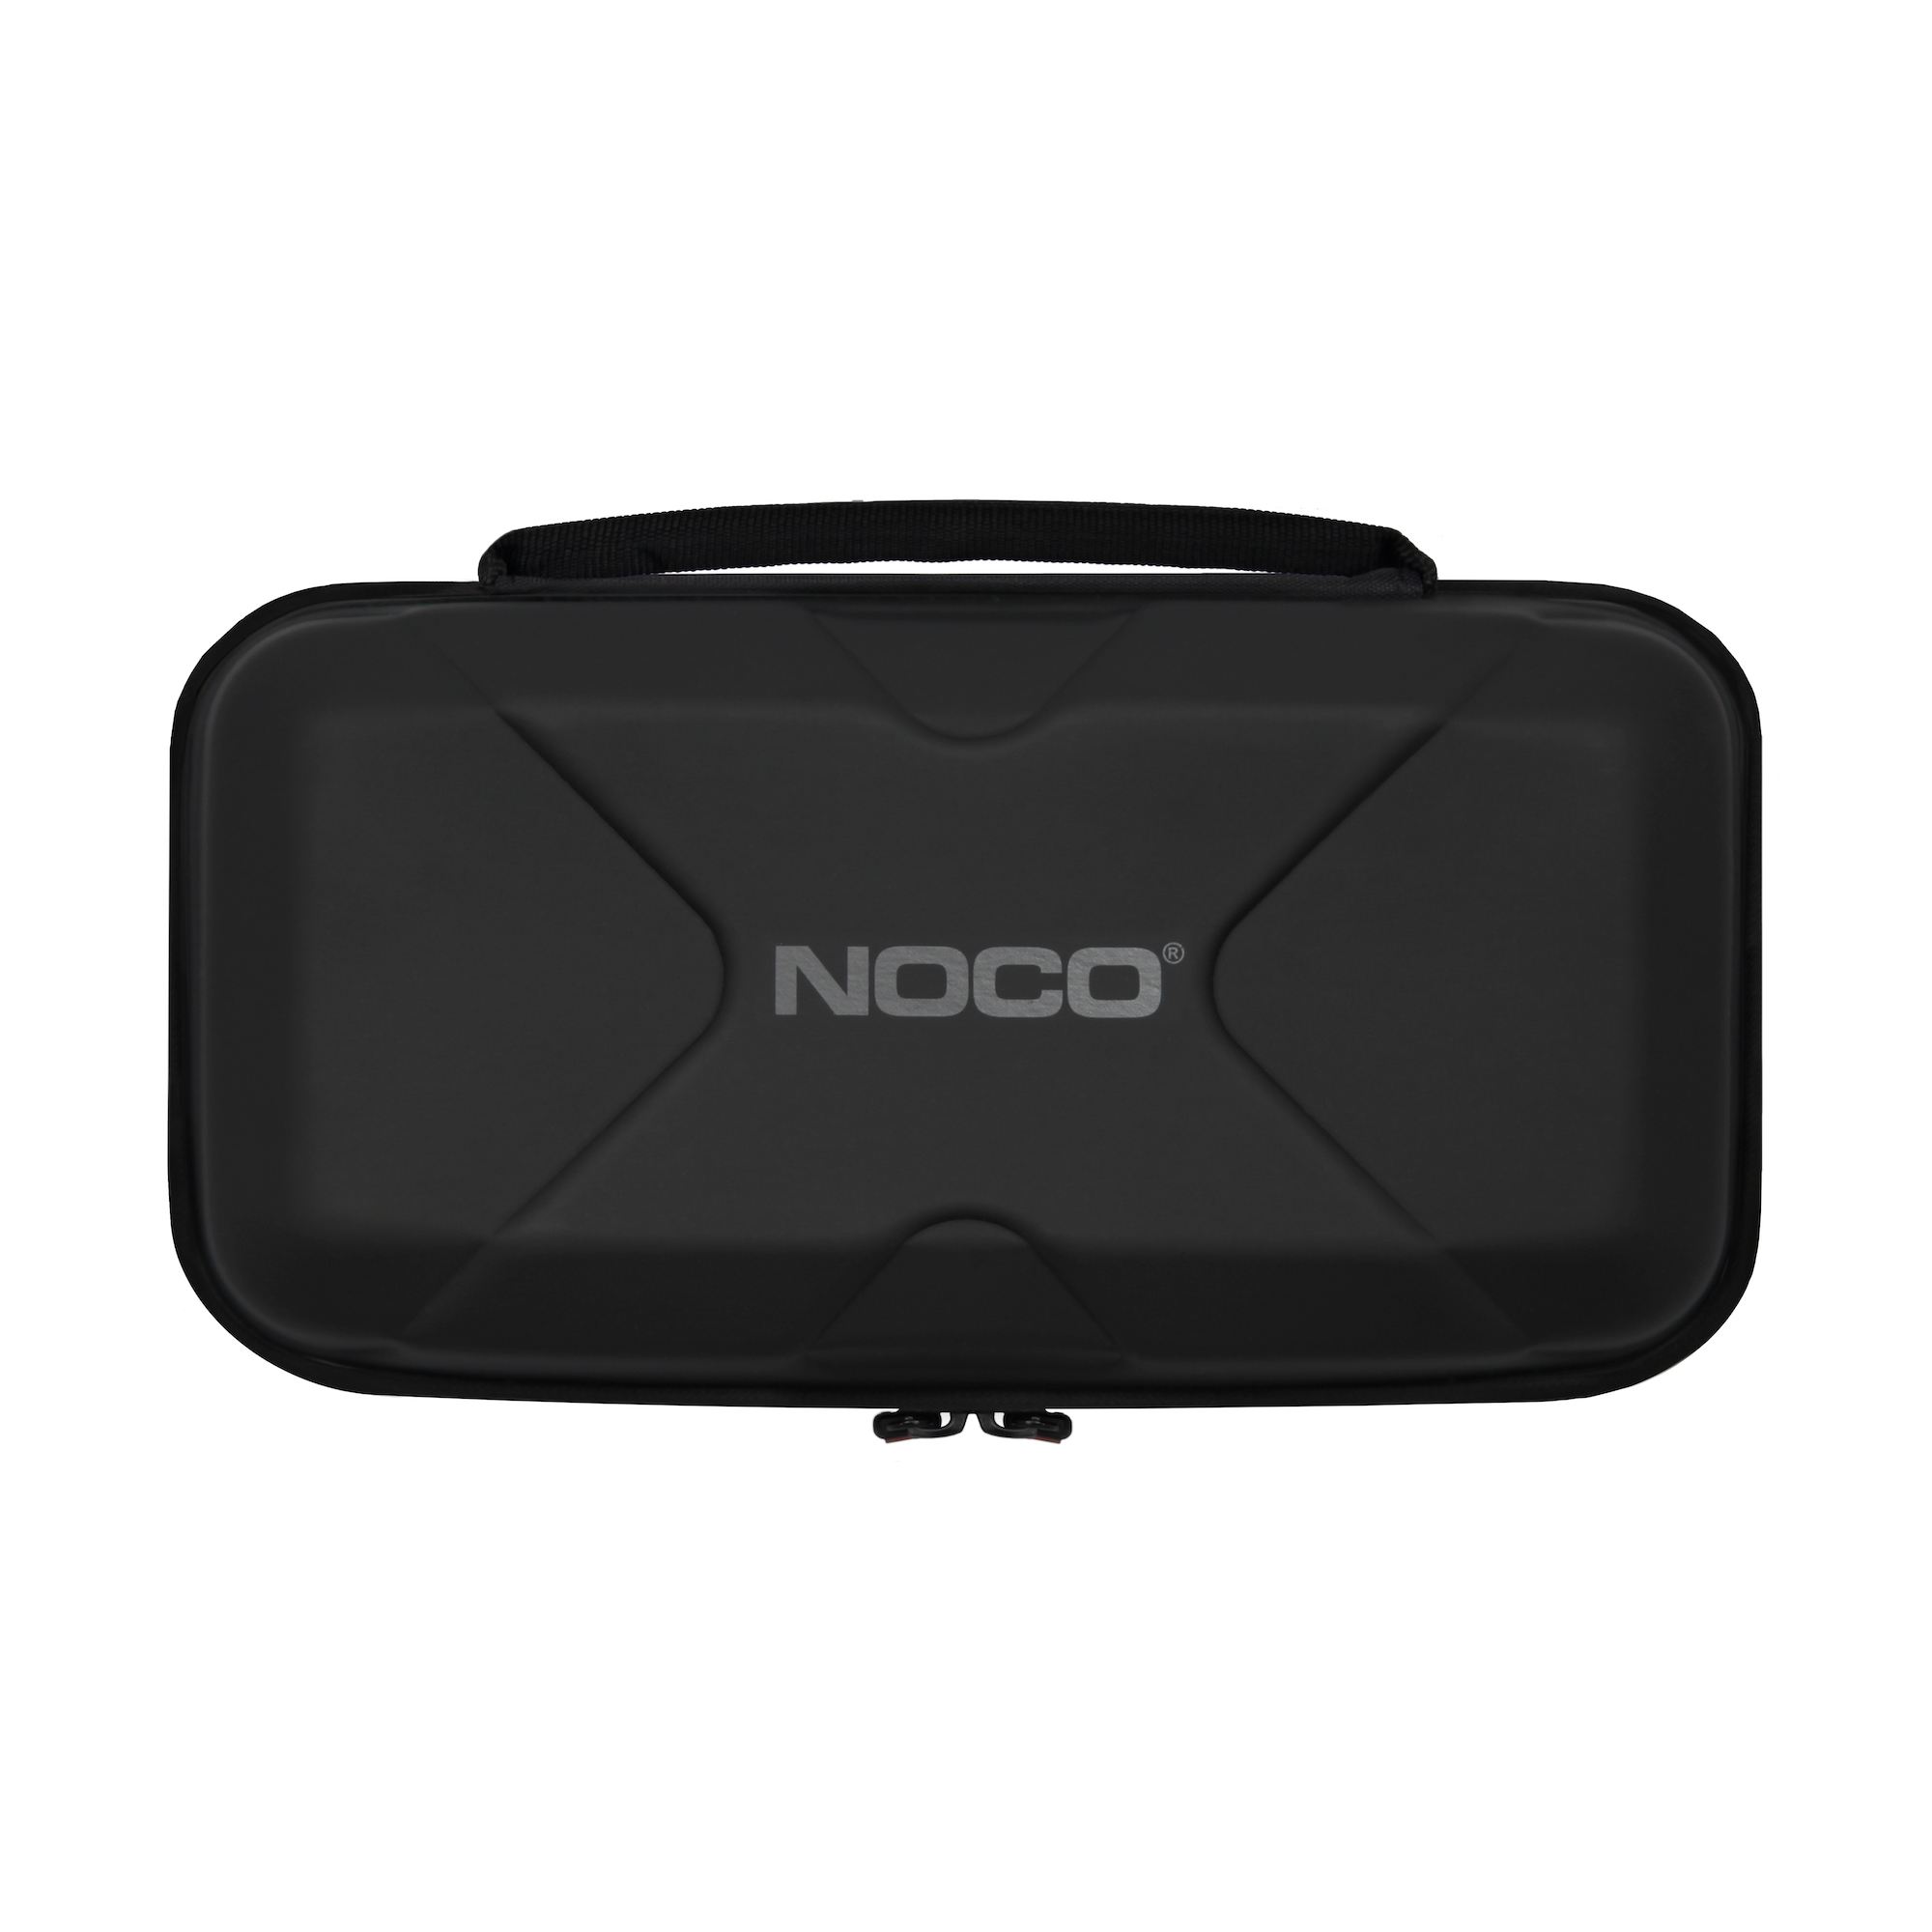 NOCO Plus Jump Starter Case Picture 1